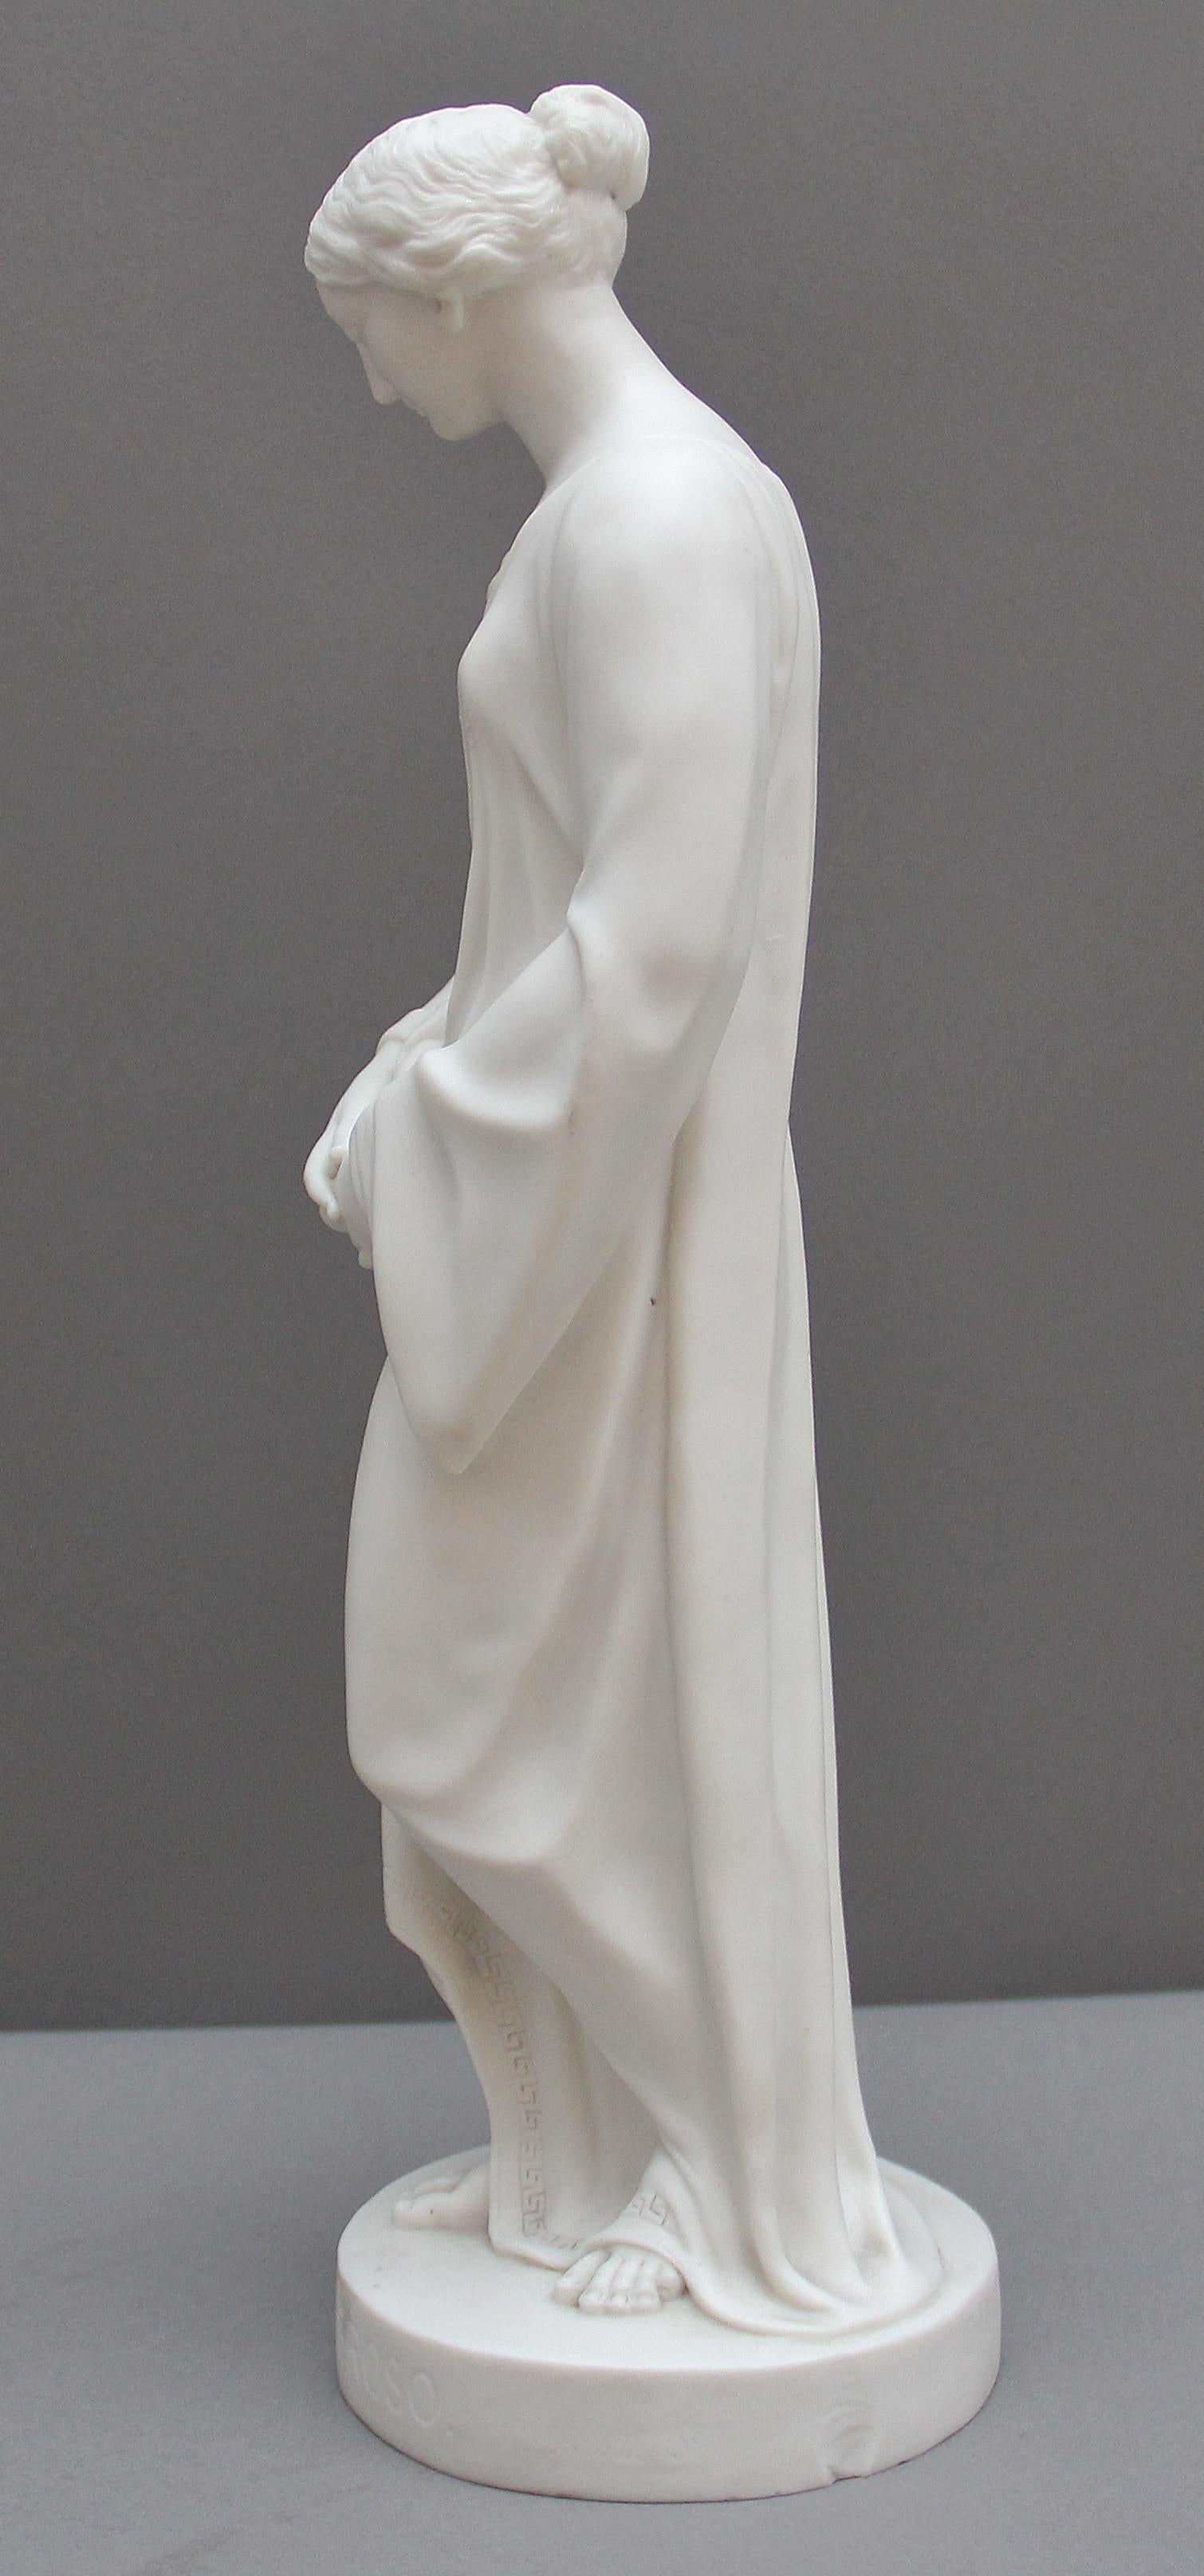 19th Century Parian Figure Il Penseroso In Good Condition For Sale In Martlesham, GB